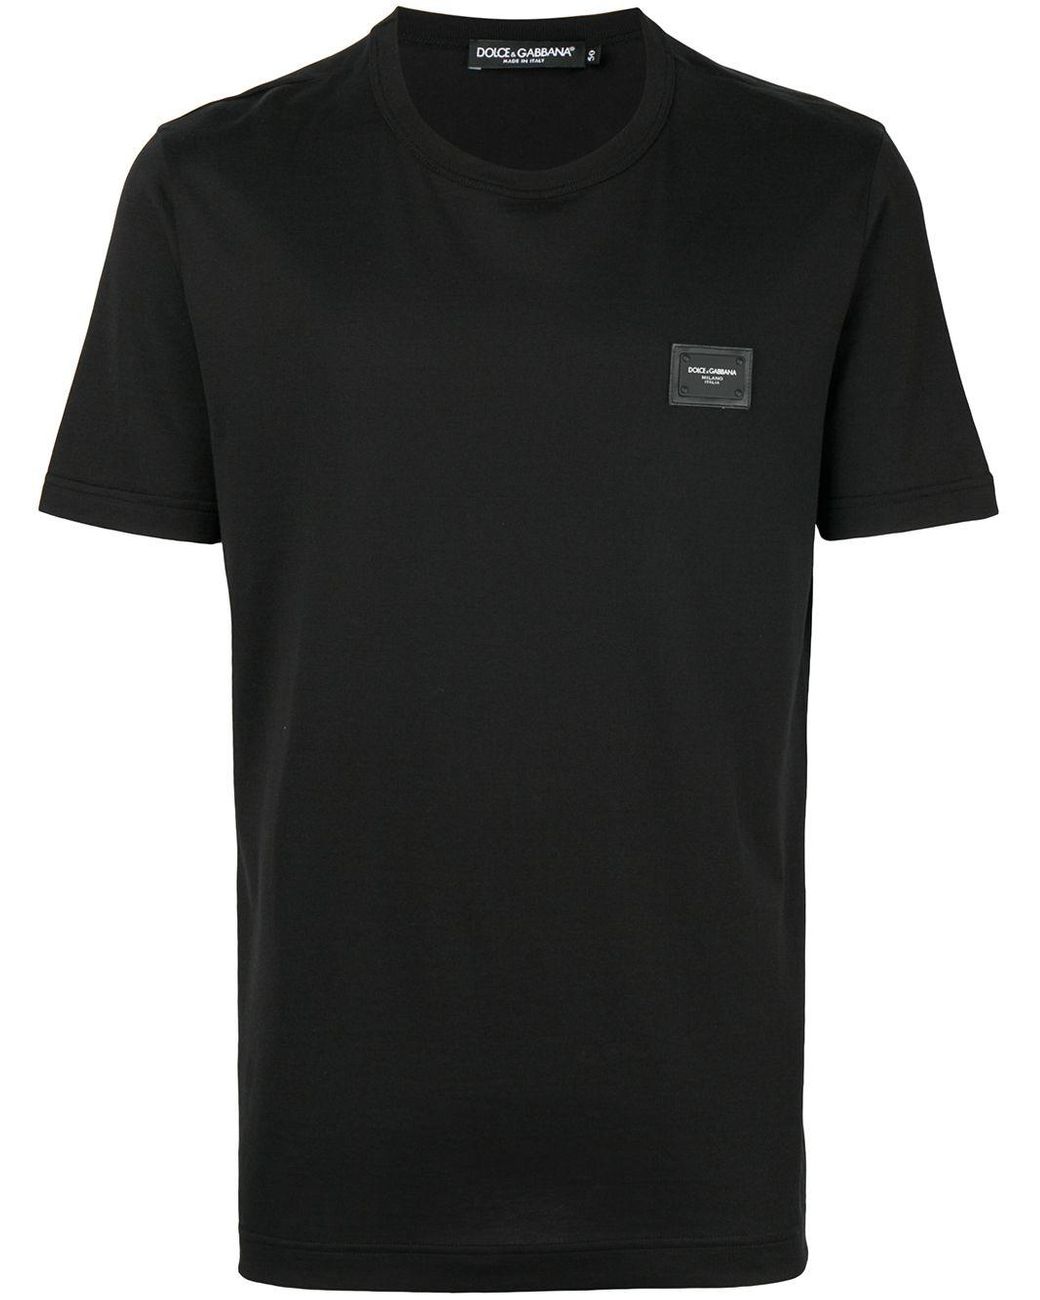 Dolce & Gabbana Cotton Crew-neck T-shirt in Black for Men - Lyst